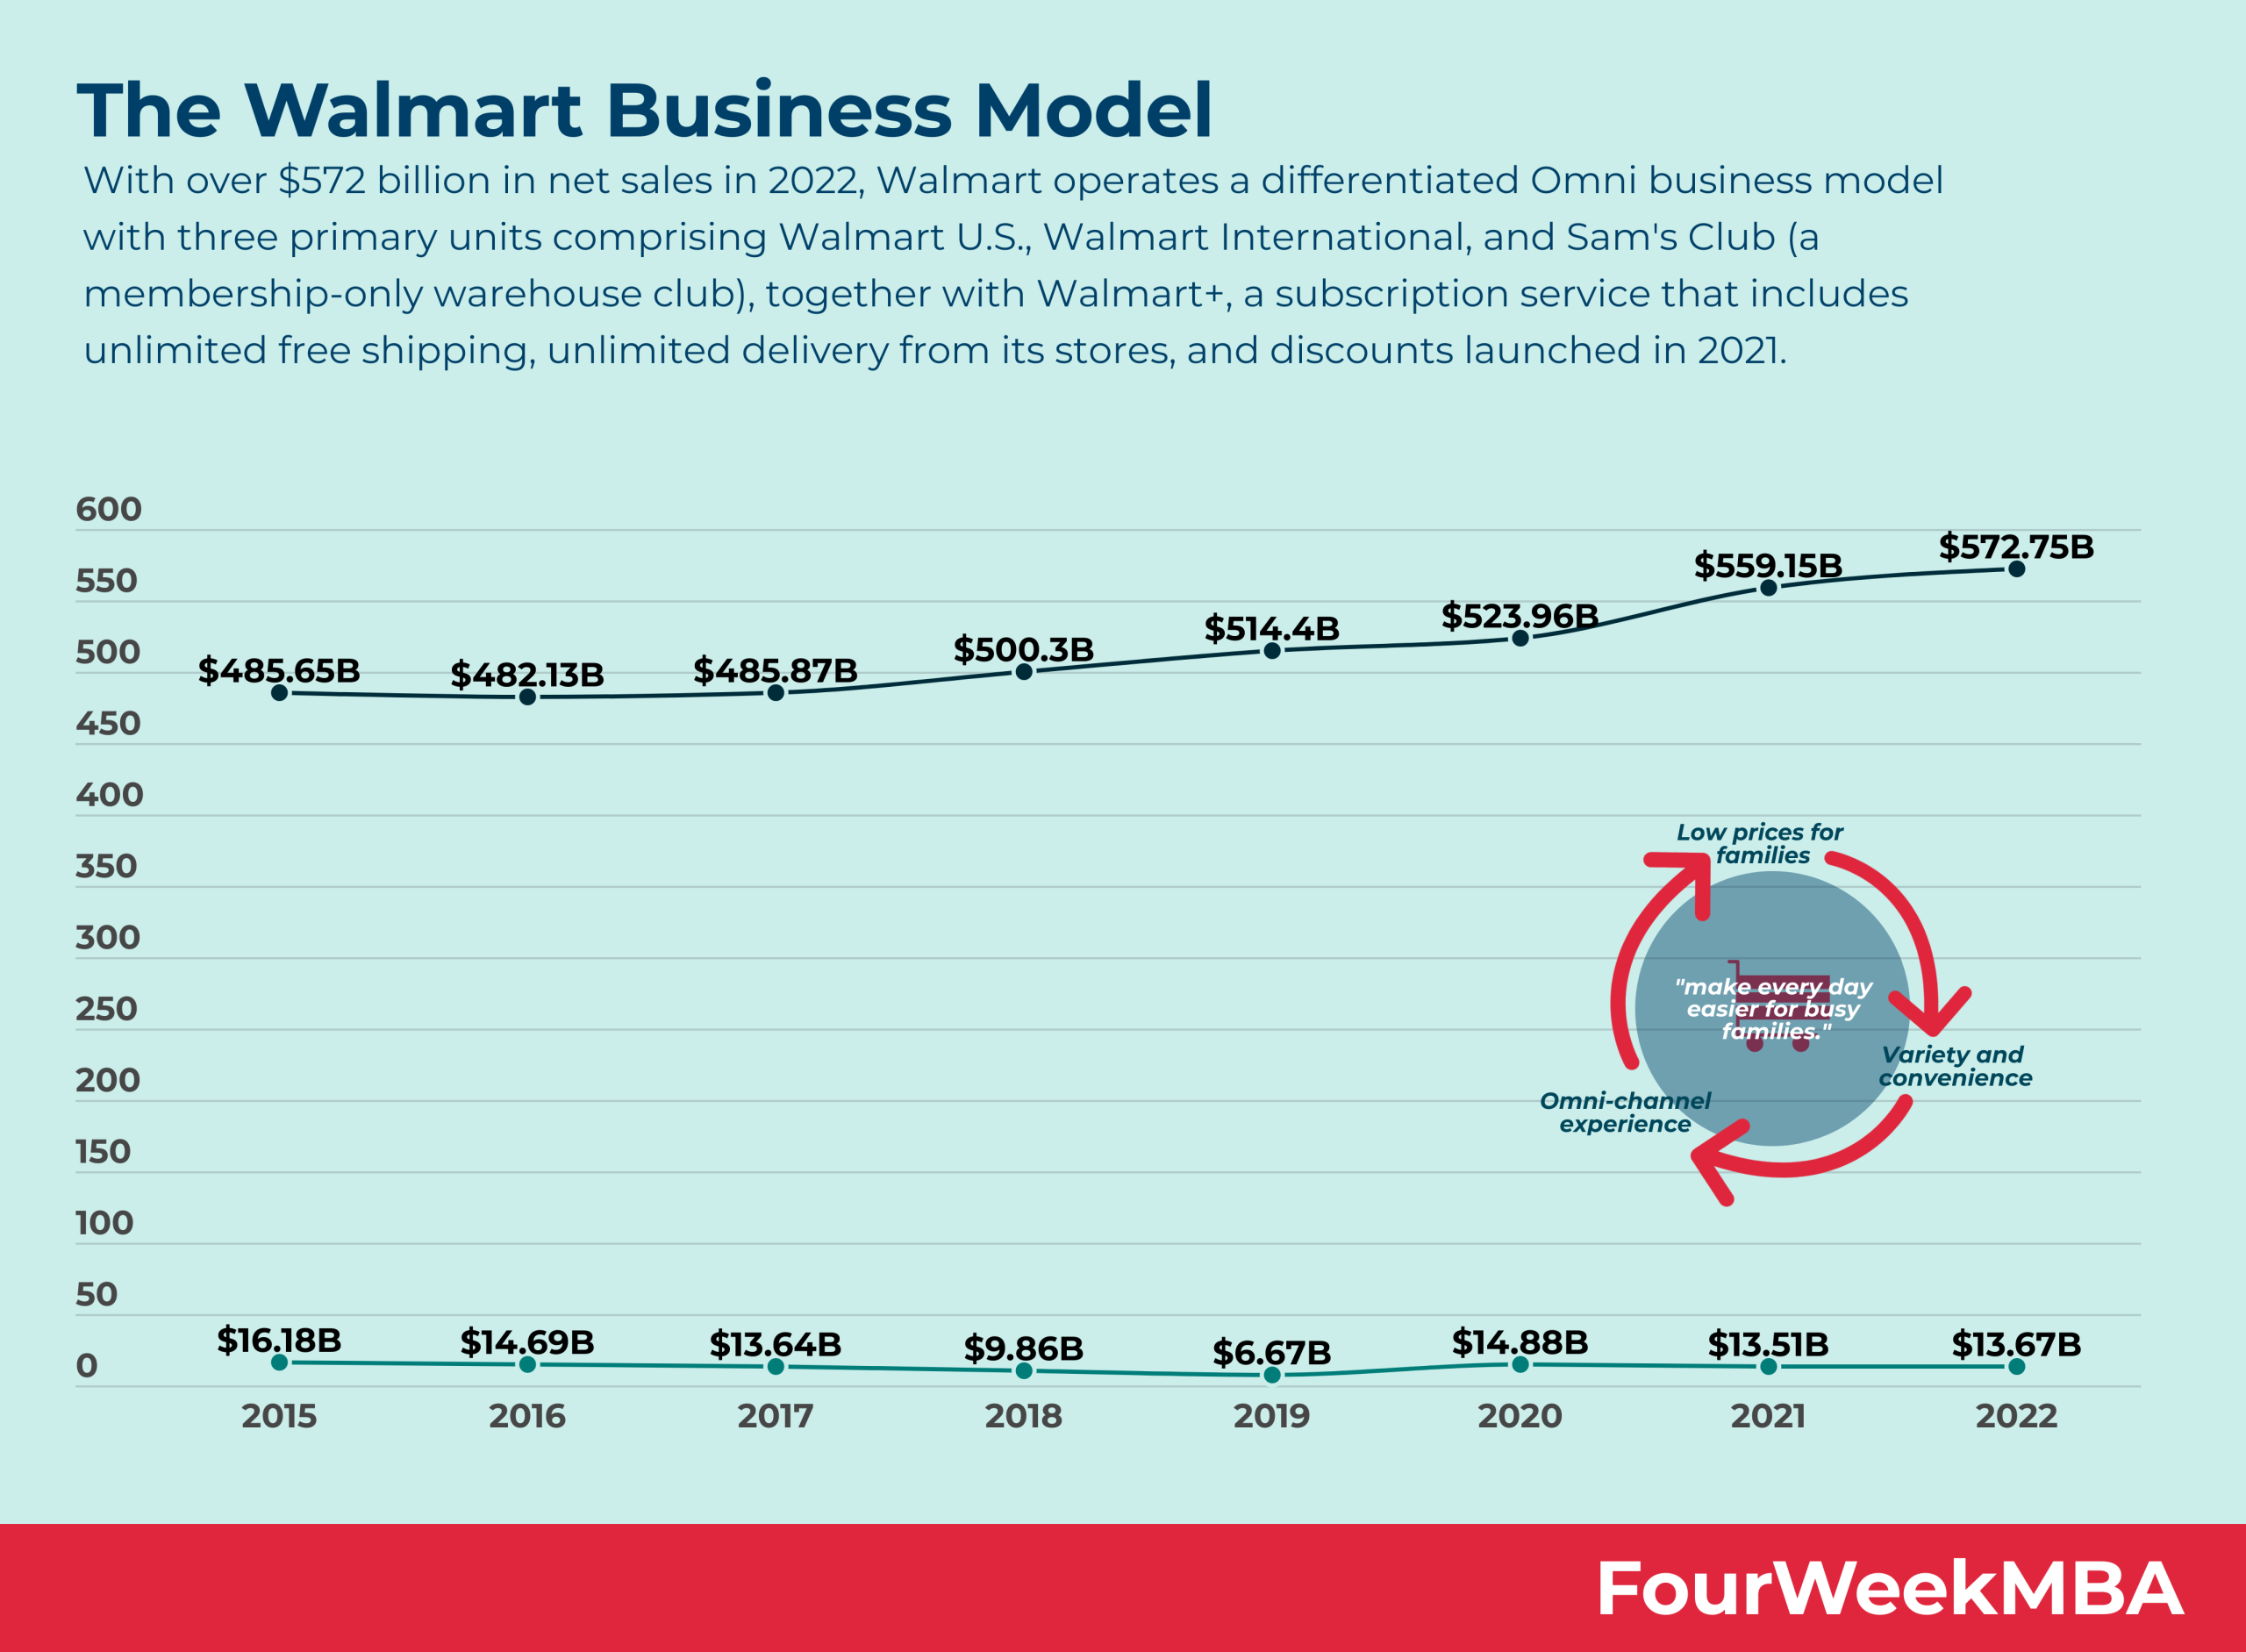 The Walmart Business Model Analysis FourWeekMBA